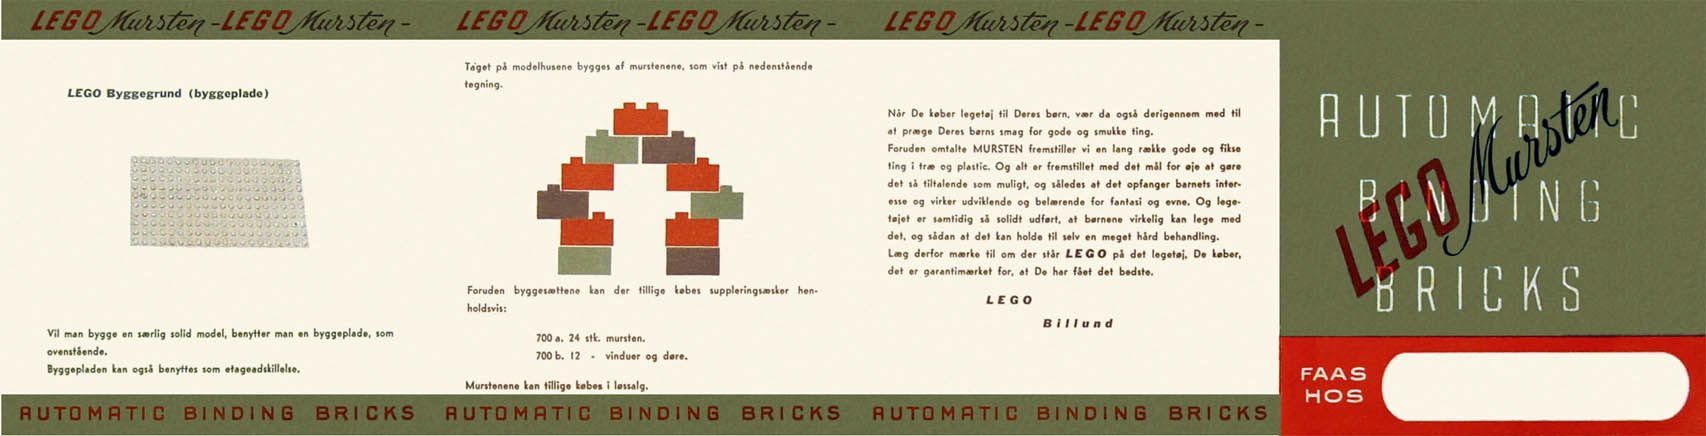 Lego ABB/Mursten catalog